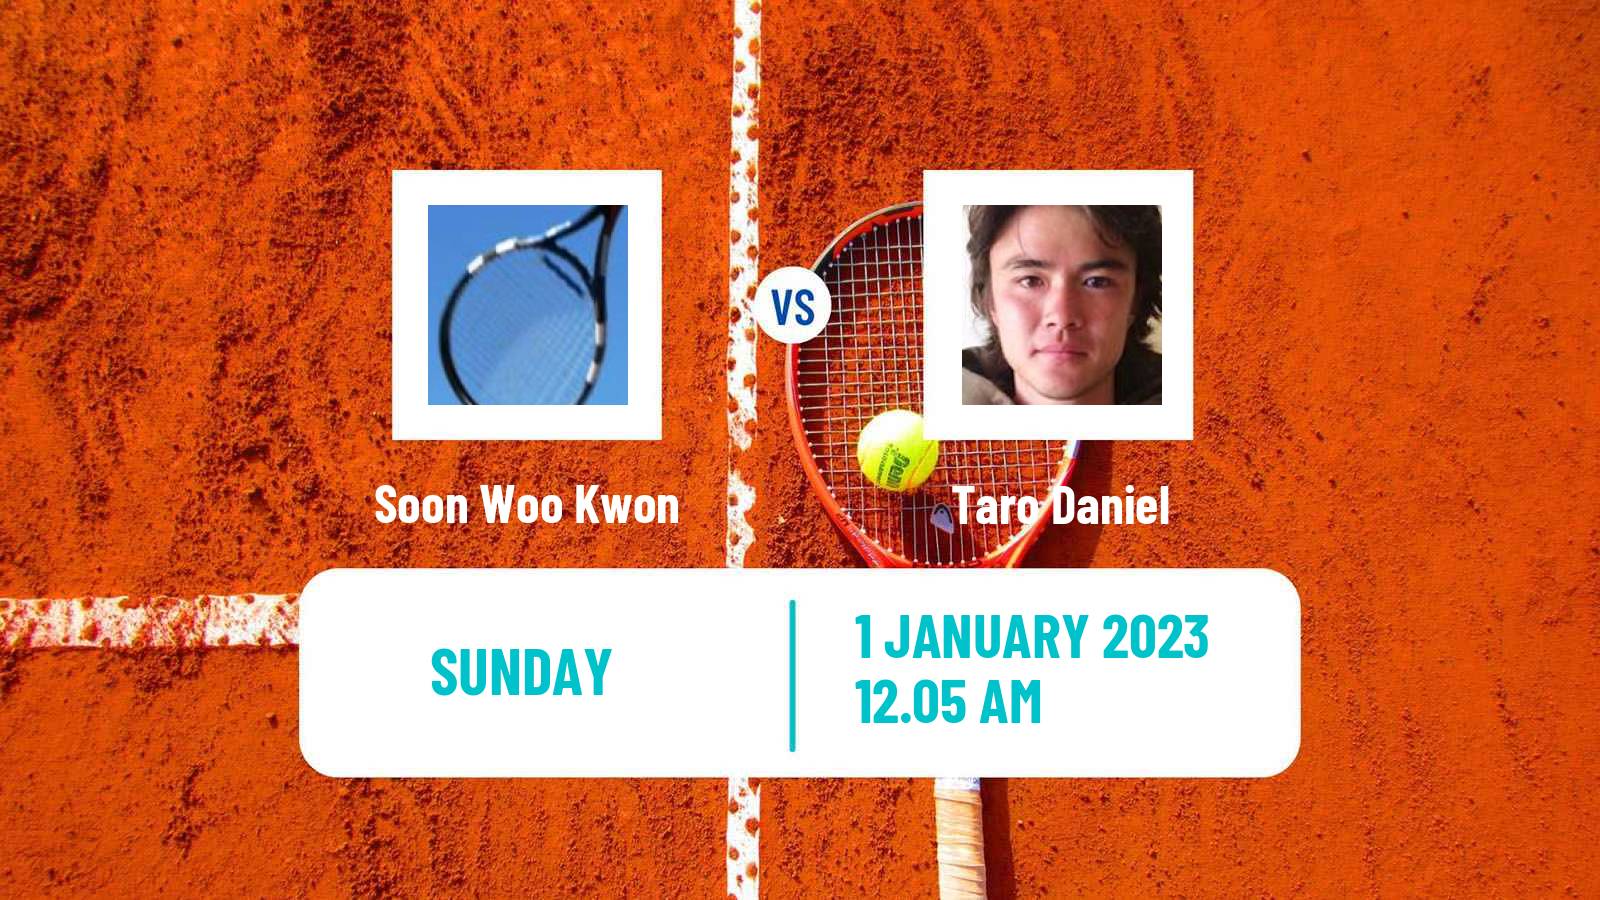 Tennis ATP Adelaide Soon Woo Kwon - Taro Daniel